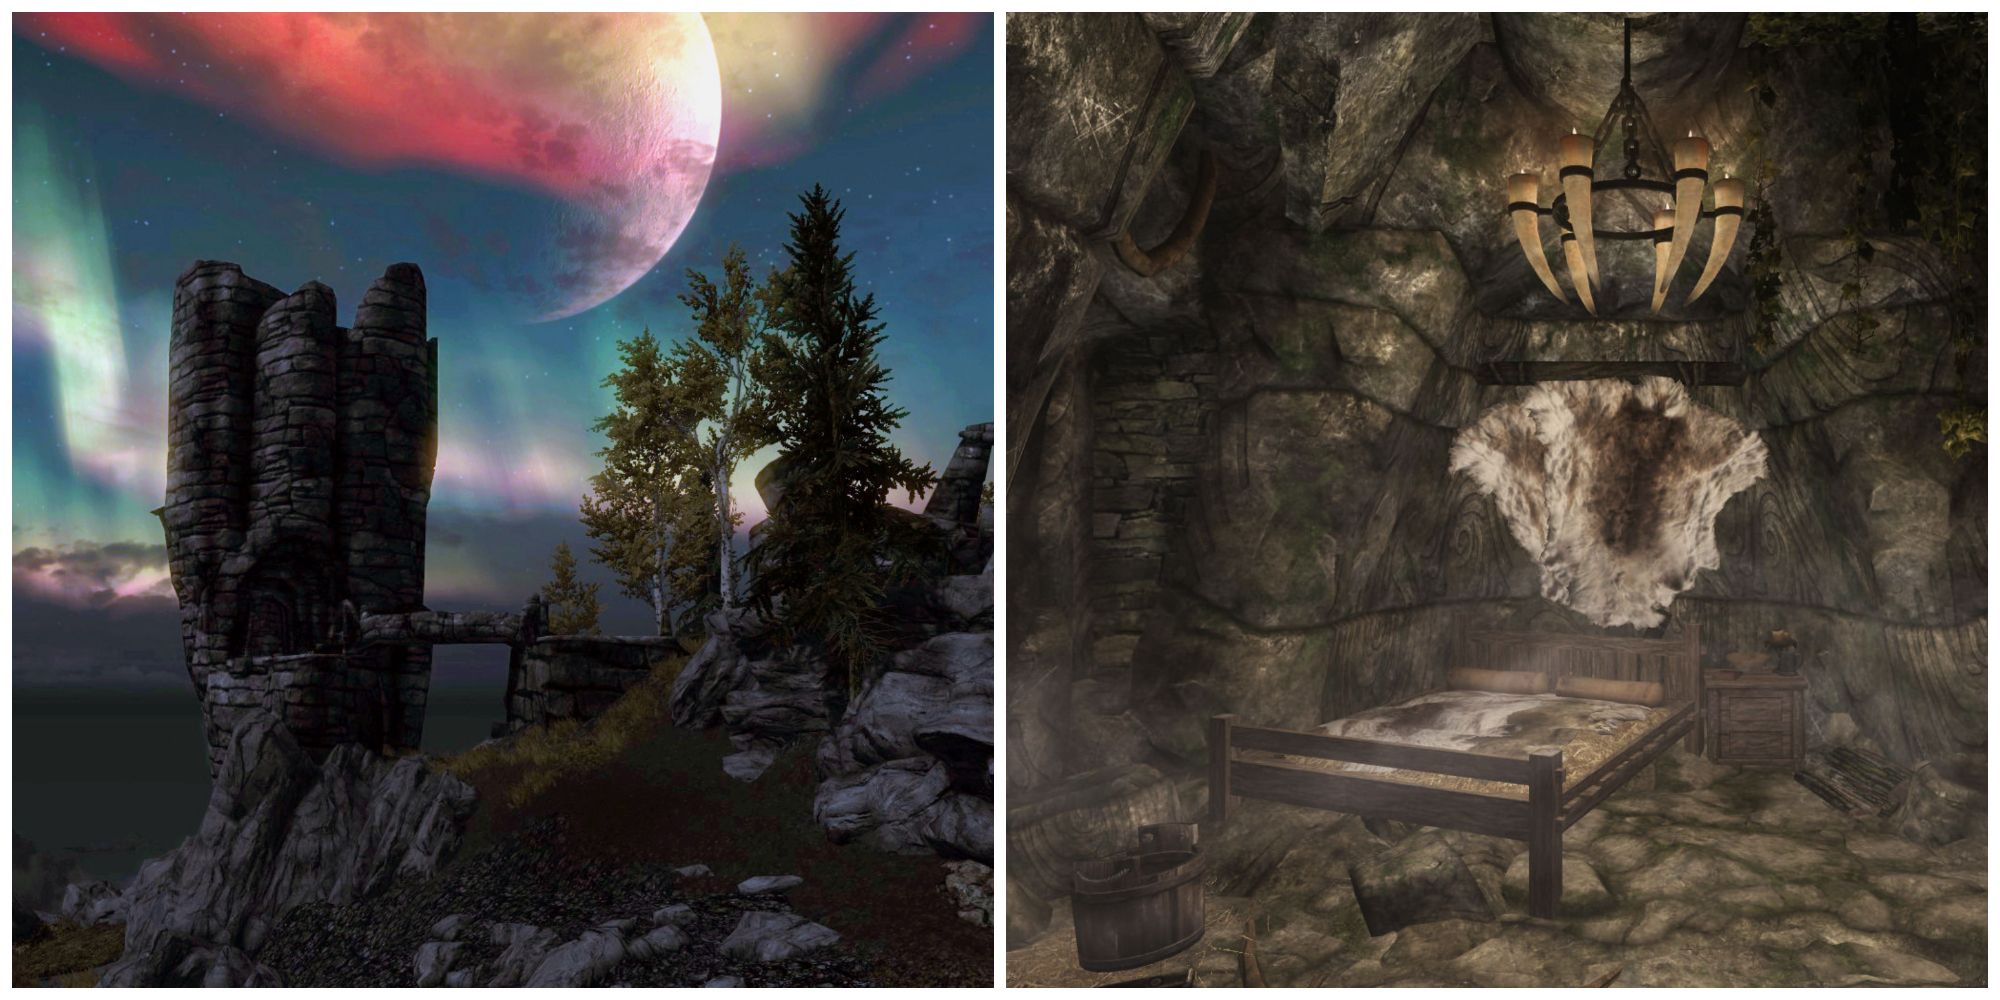 Skyrim mod lets you explore massive new Nordic ruin created by